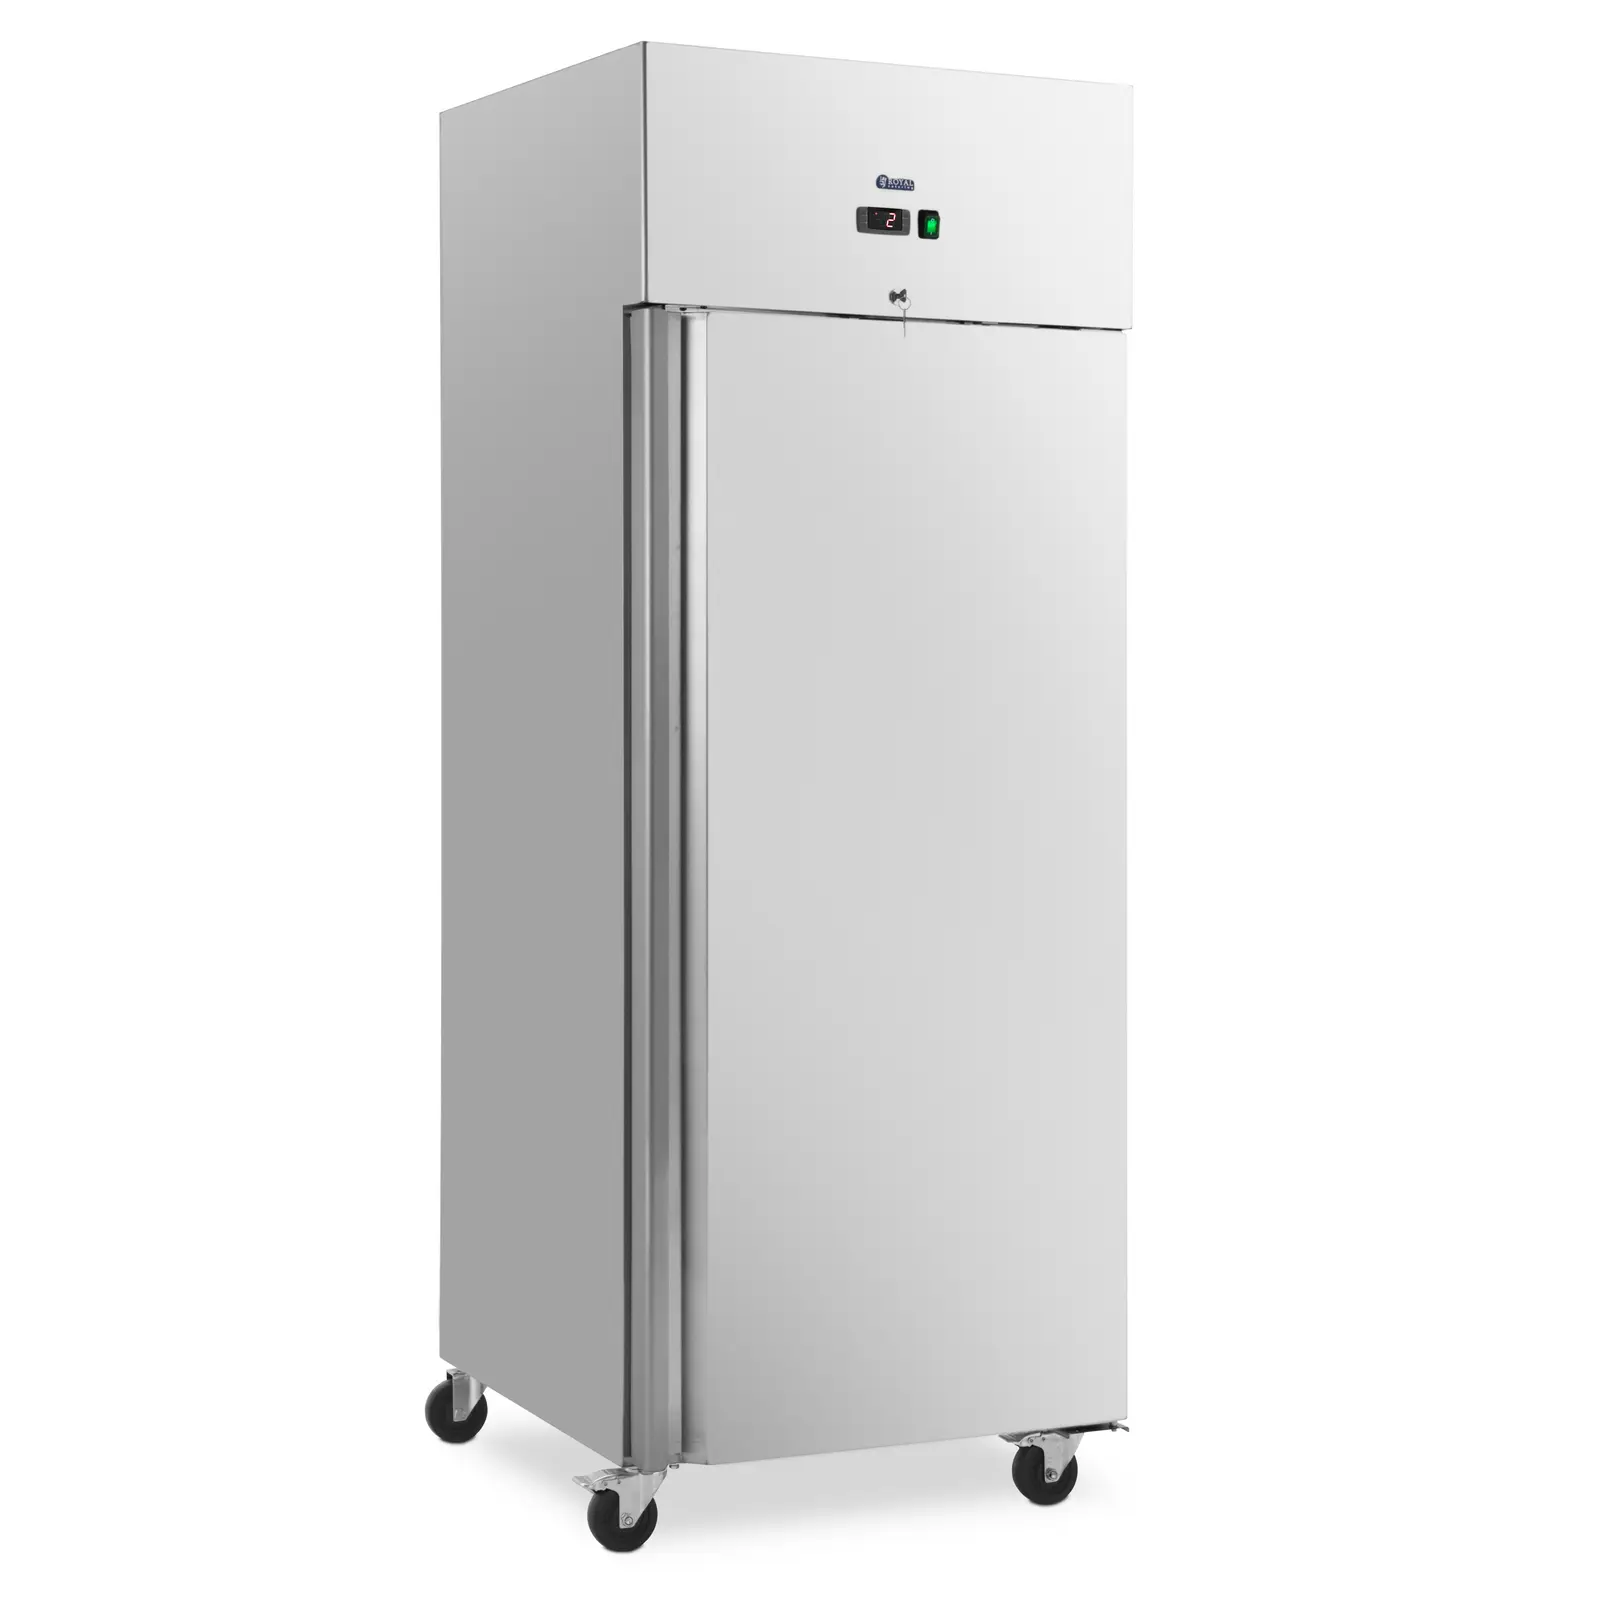 Gastro-Kühlschrank - 485 l - Edelstahl - 1 Tür - 4 Rollen - abschließbar - Royal Catering